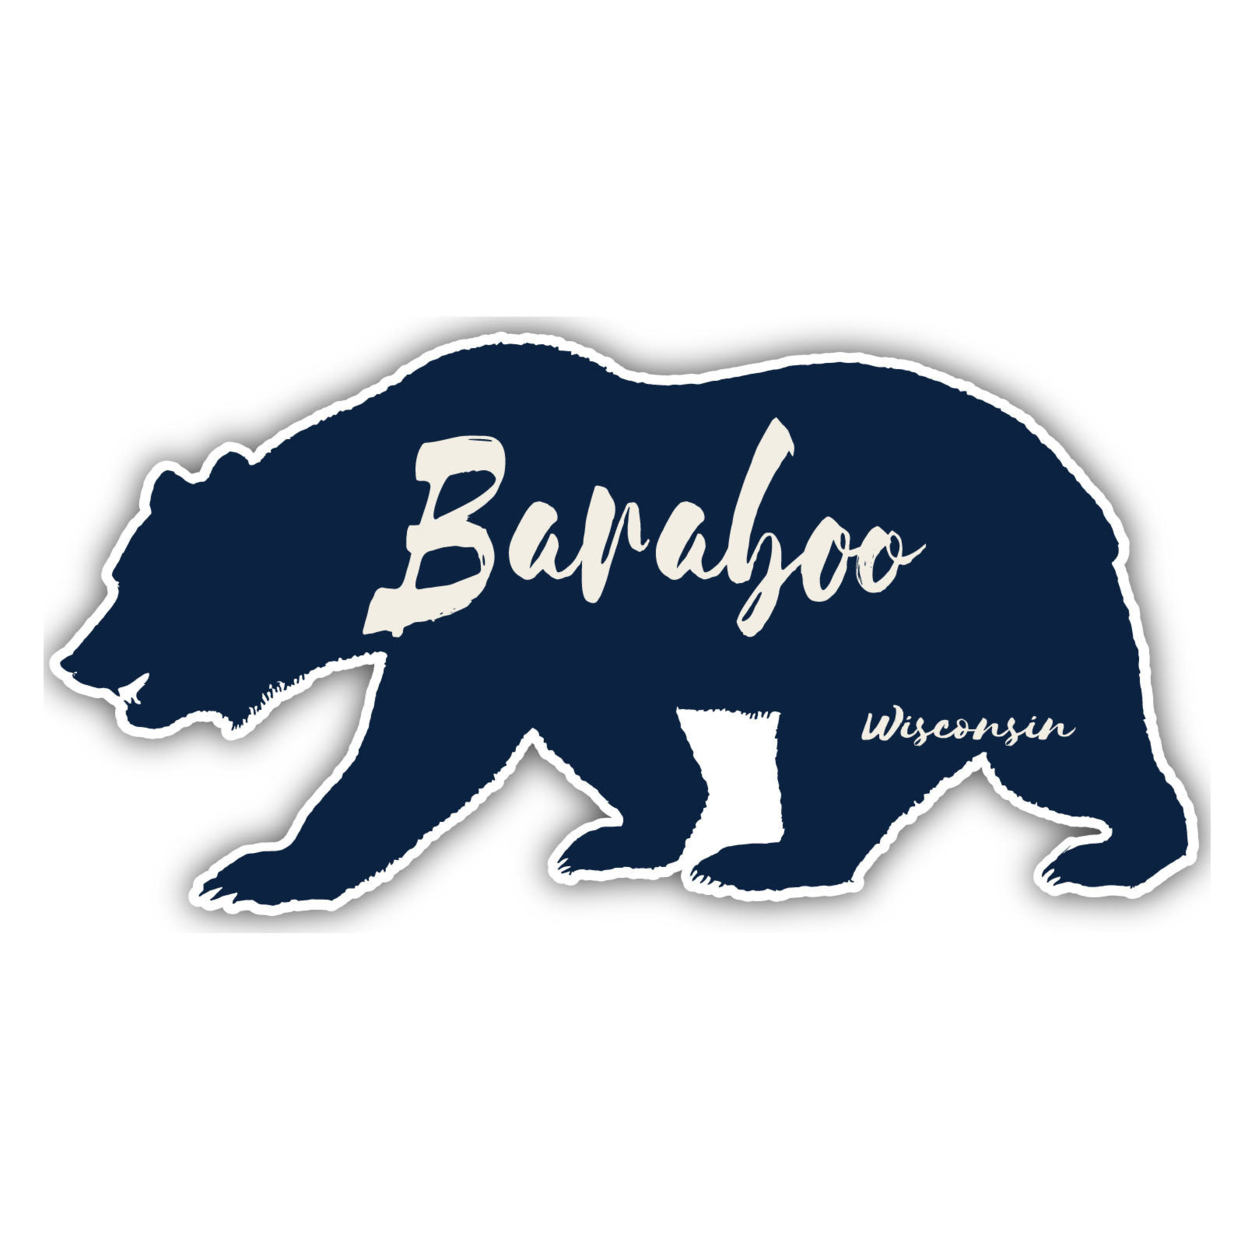 Baraboo Wisconsin Souvenir Decorative Stickers (Choose Theme And Size) - Single Unit, 6-Inch, Bear